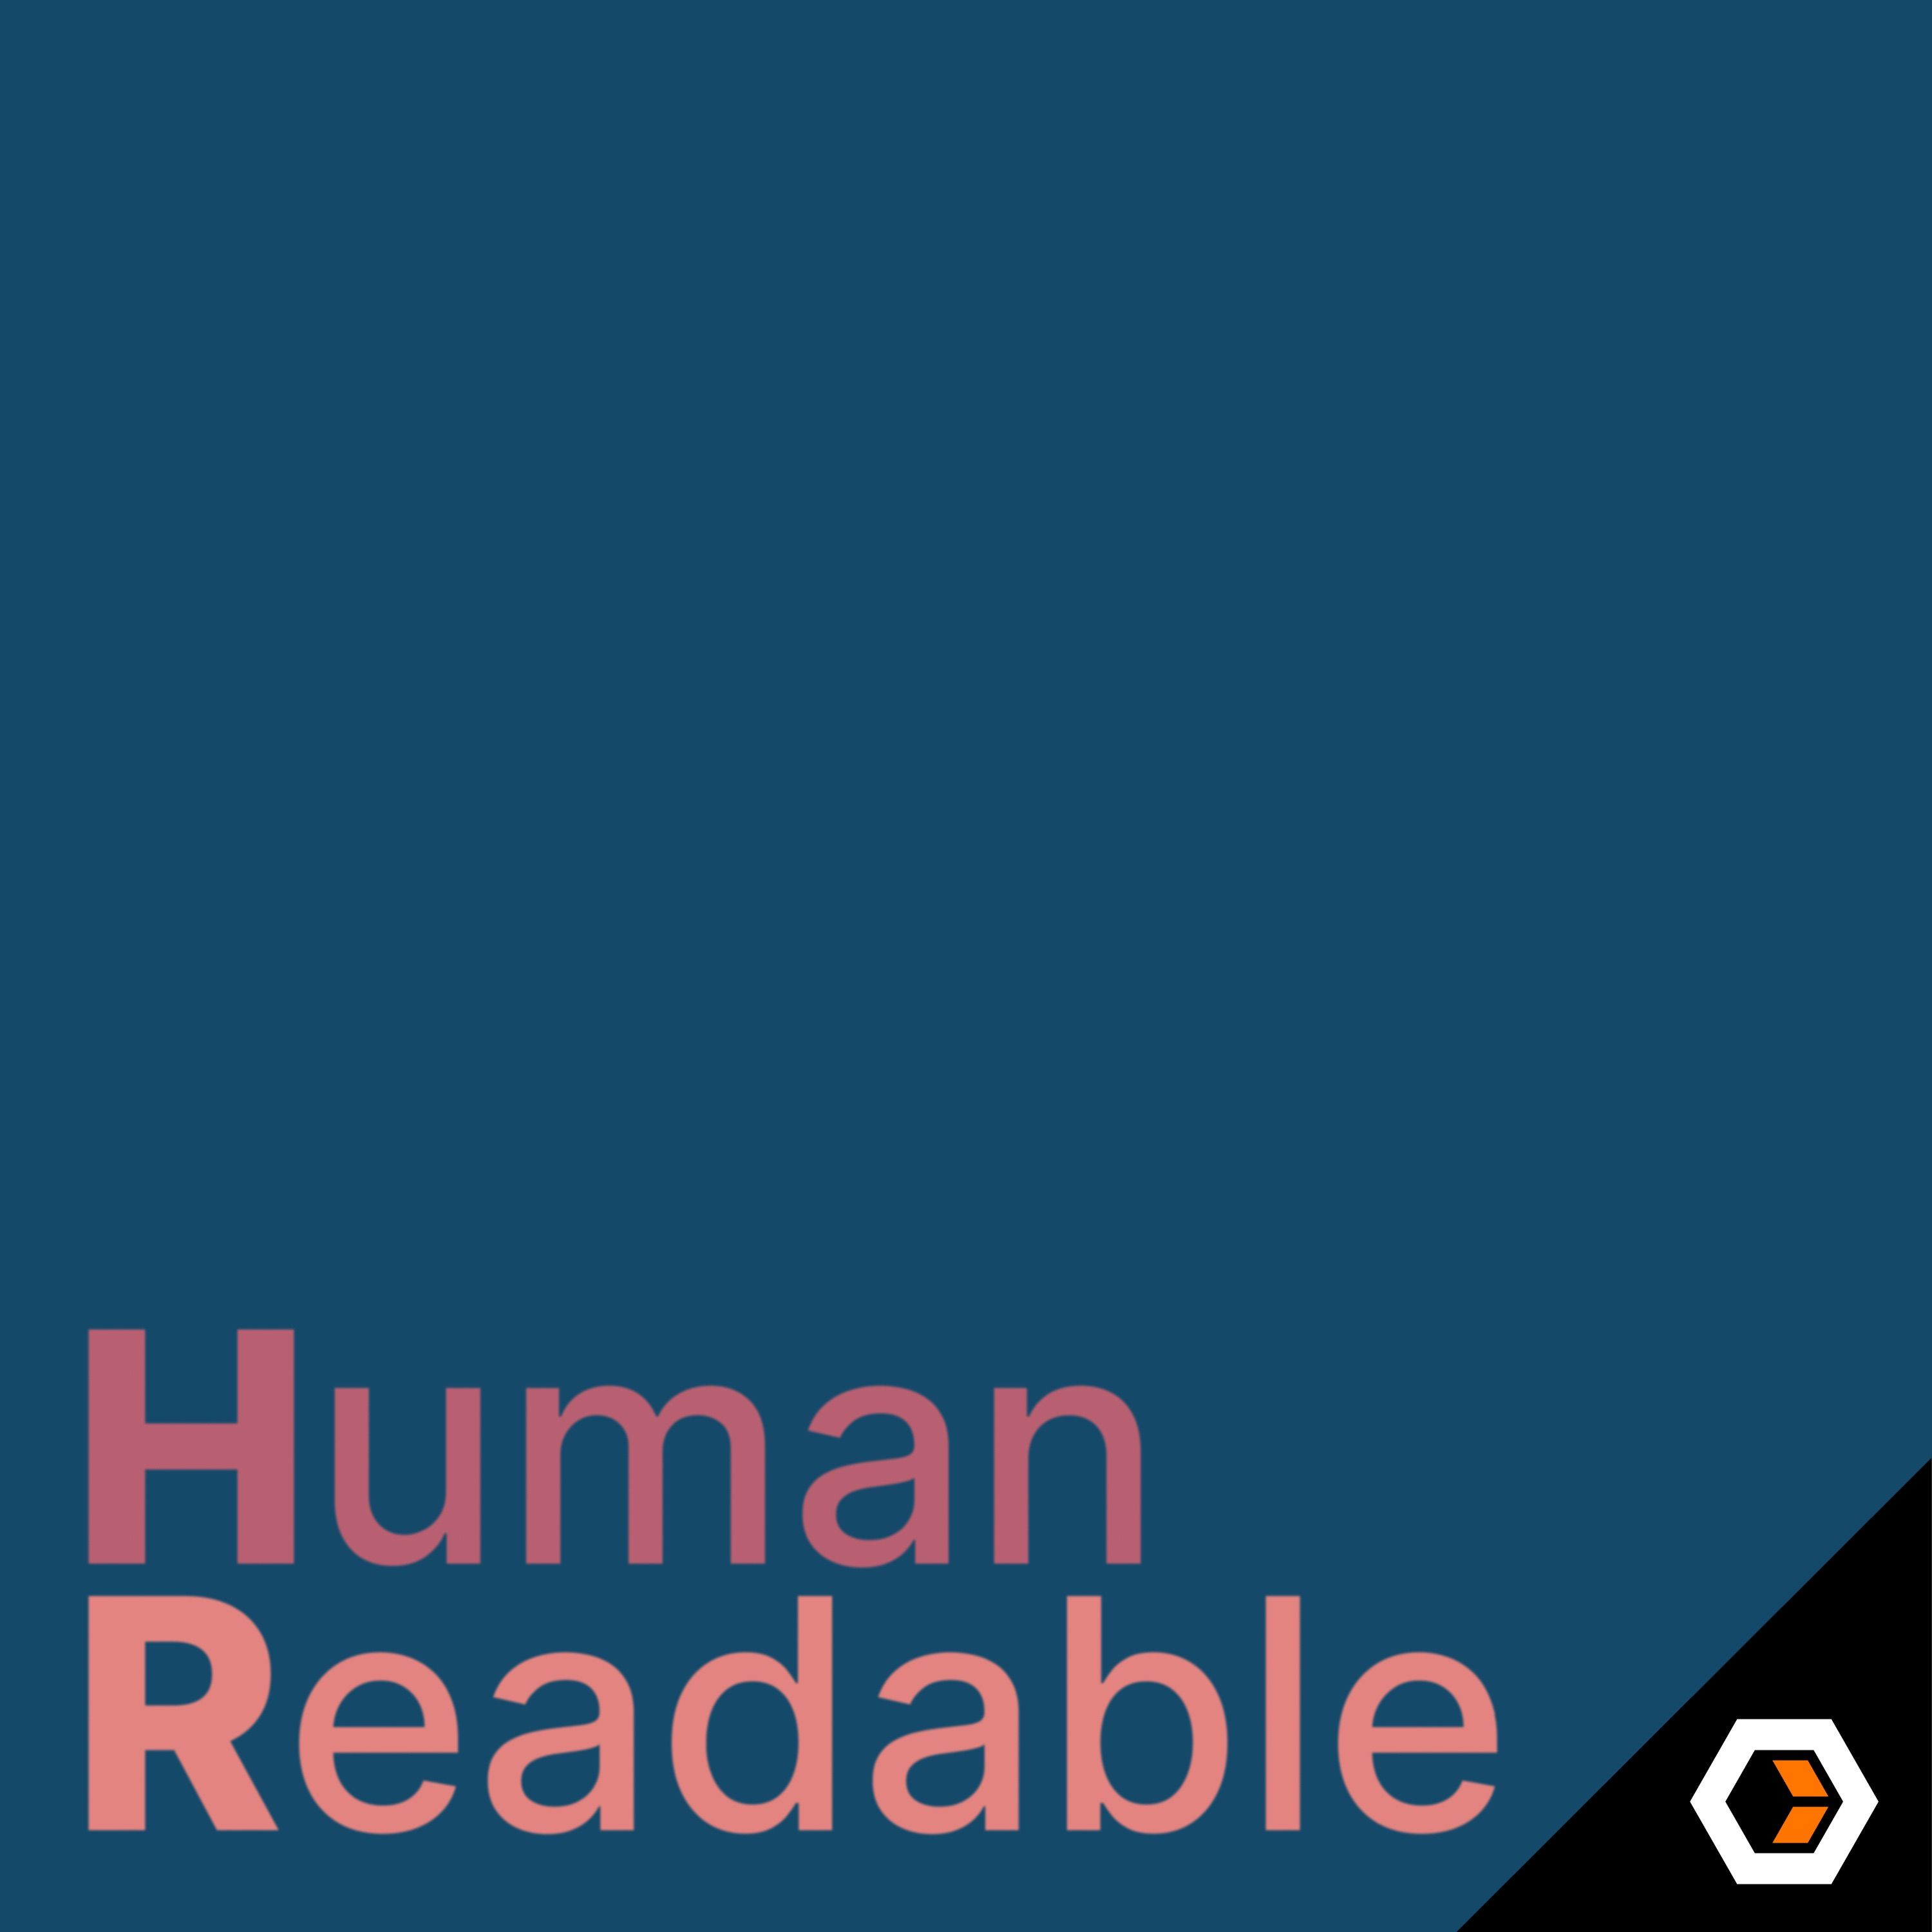 Human Readable